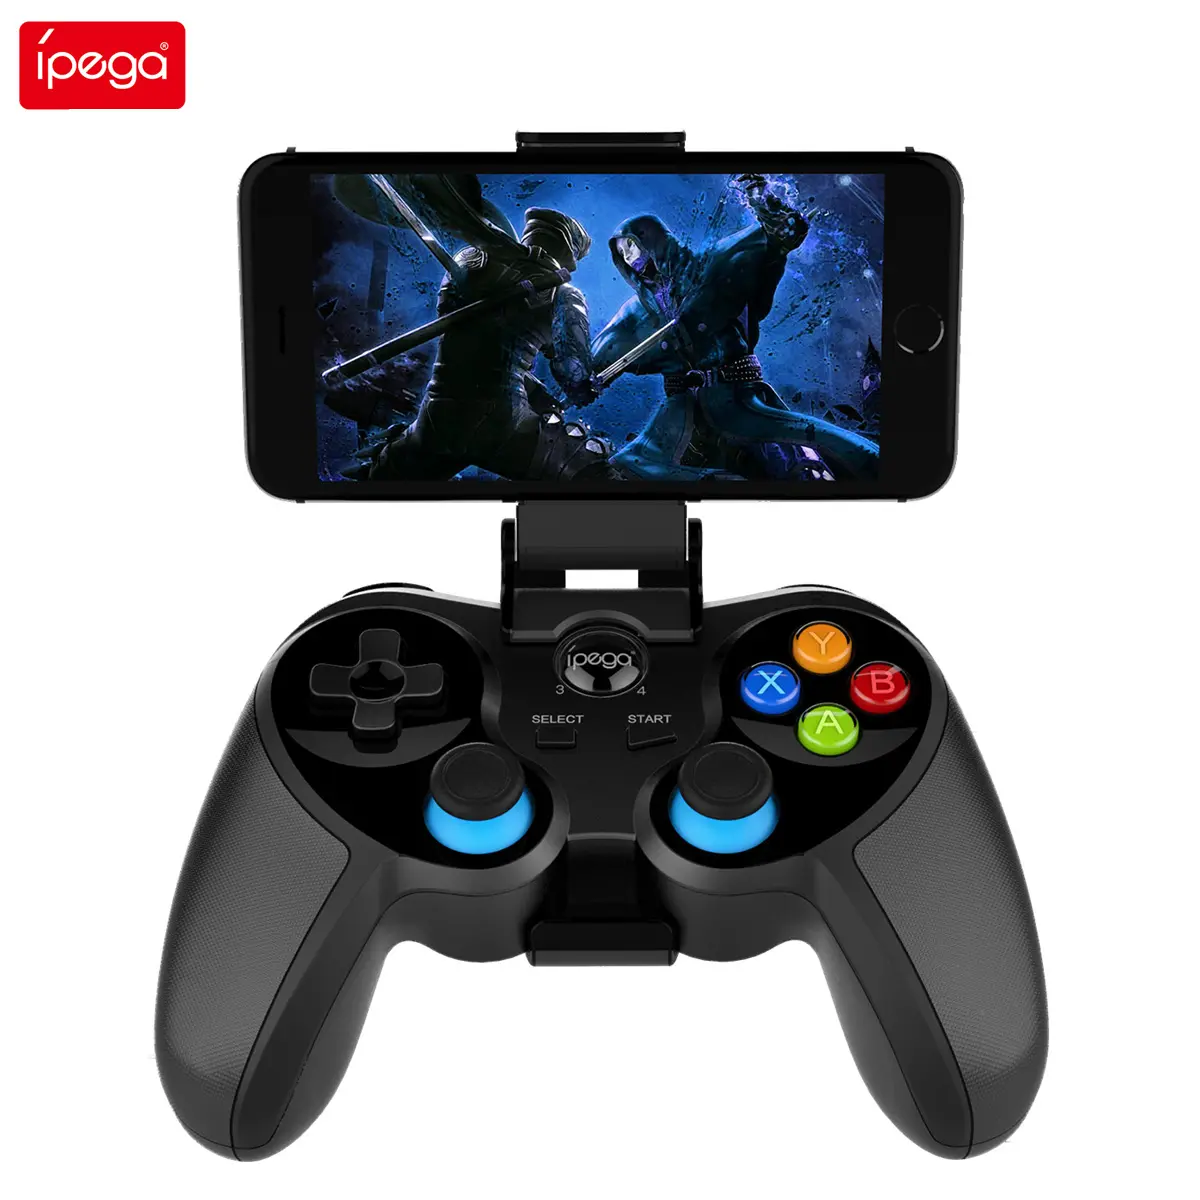 IPEGA 2021 New Products Mini Retro Video Joystick Game Controller Gamepad For Pc Game Wireless Fidget